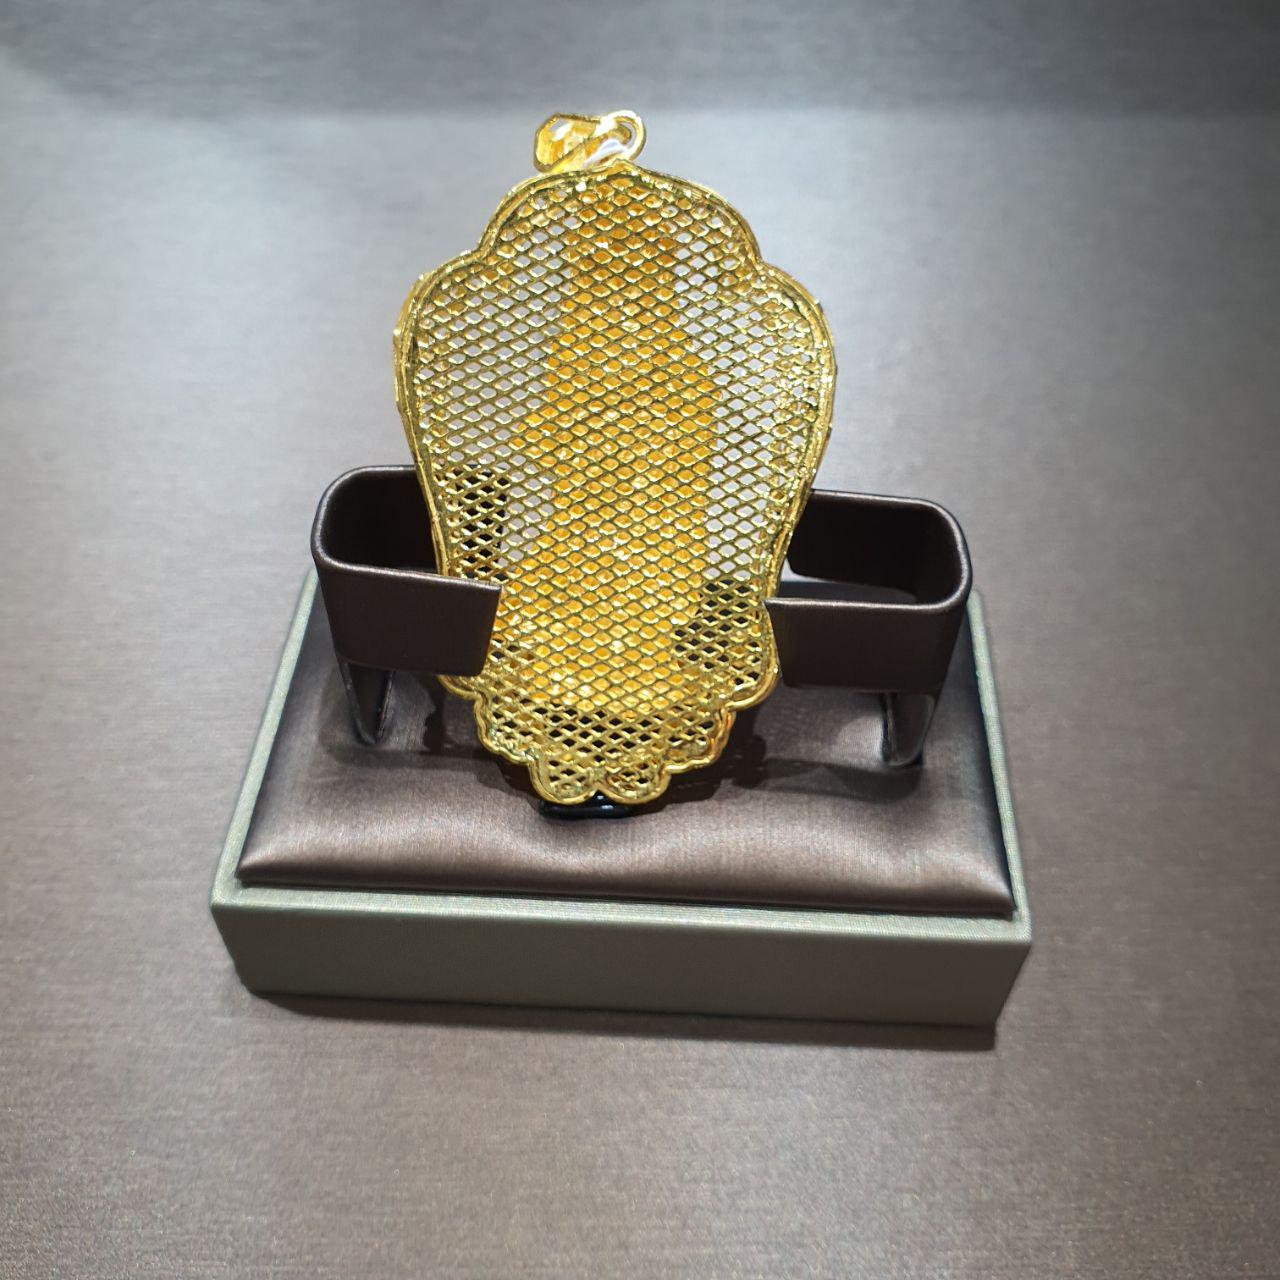 24k / 999 Gold Guan Yin Pendant-Charms & Pendants-Best Gold Shop